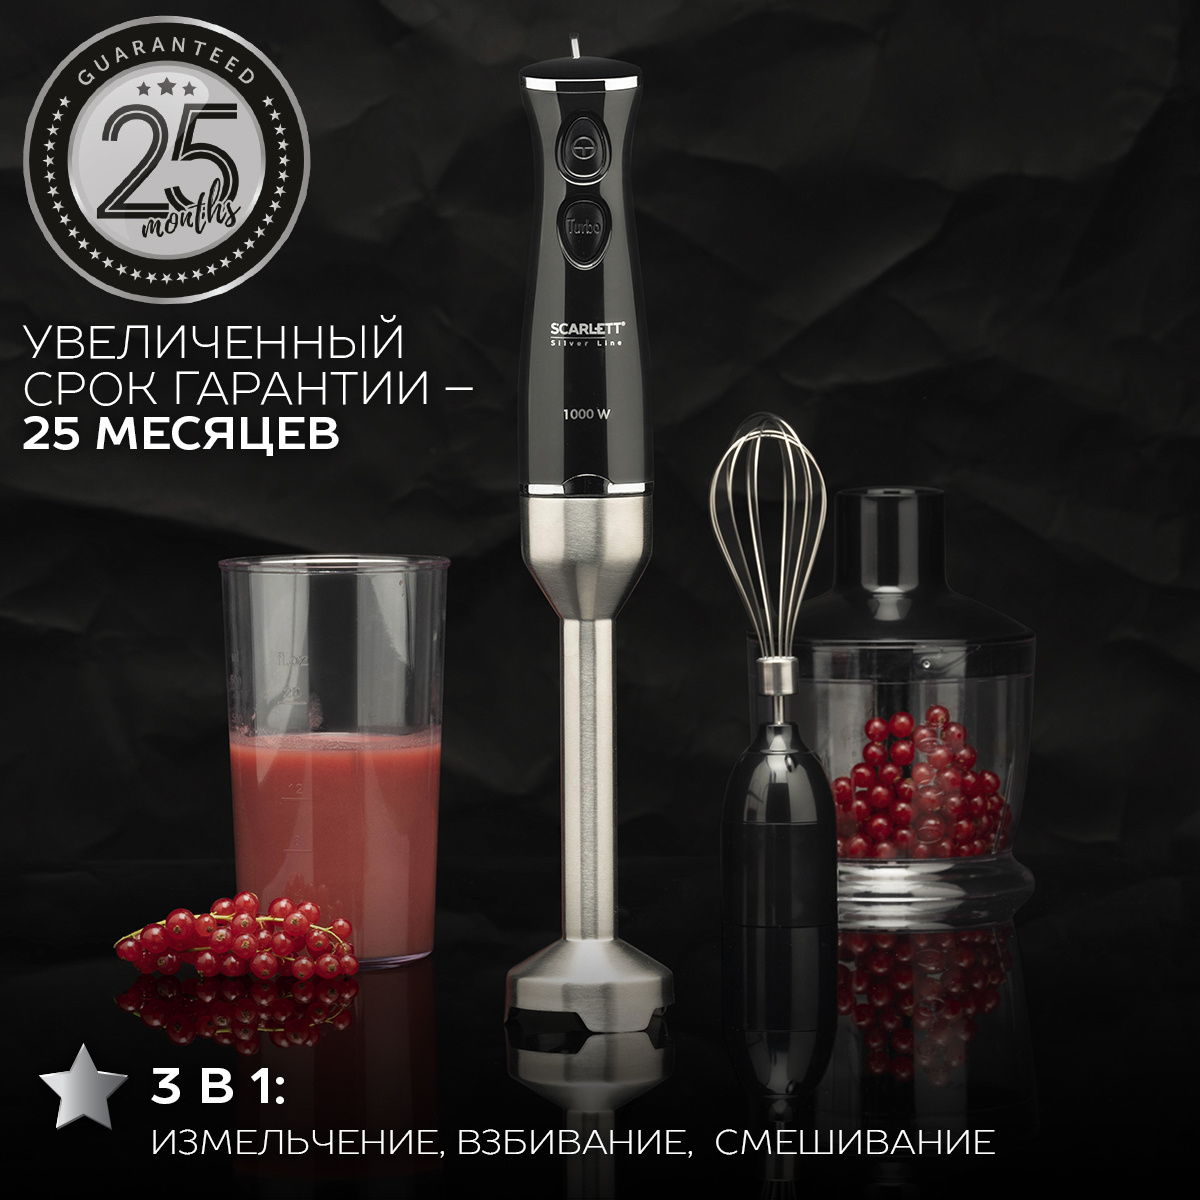 Погружной блендер Scarlett SC-HB42F73, 1000 Вт, нож MULTIEFFECT, коллекция Silver Line, черный  #1